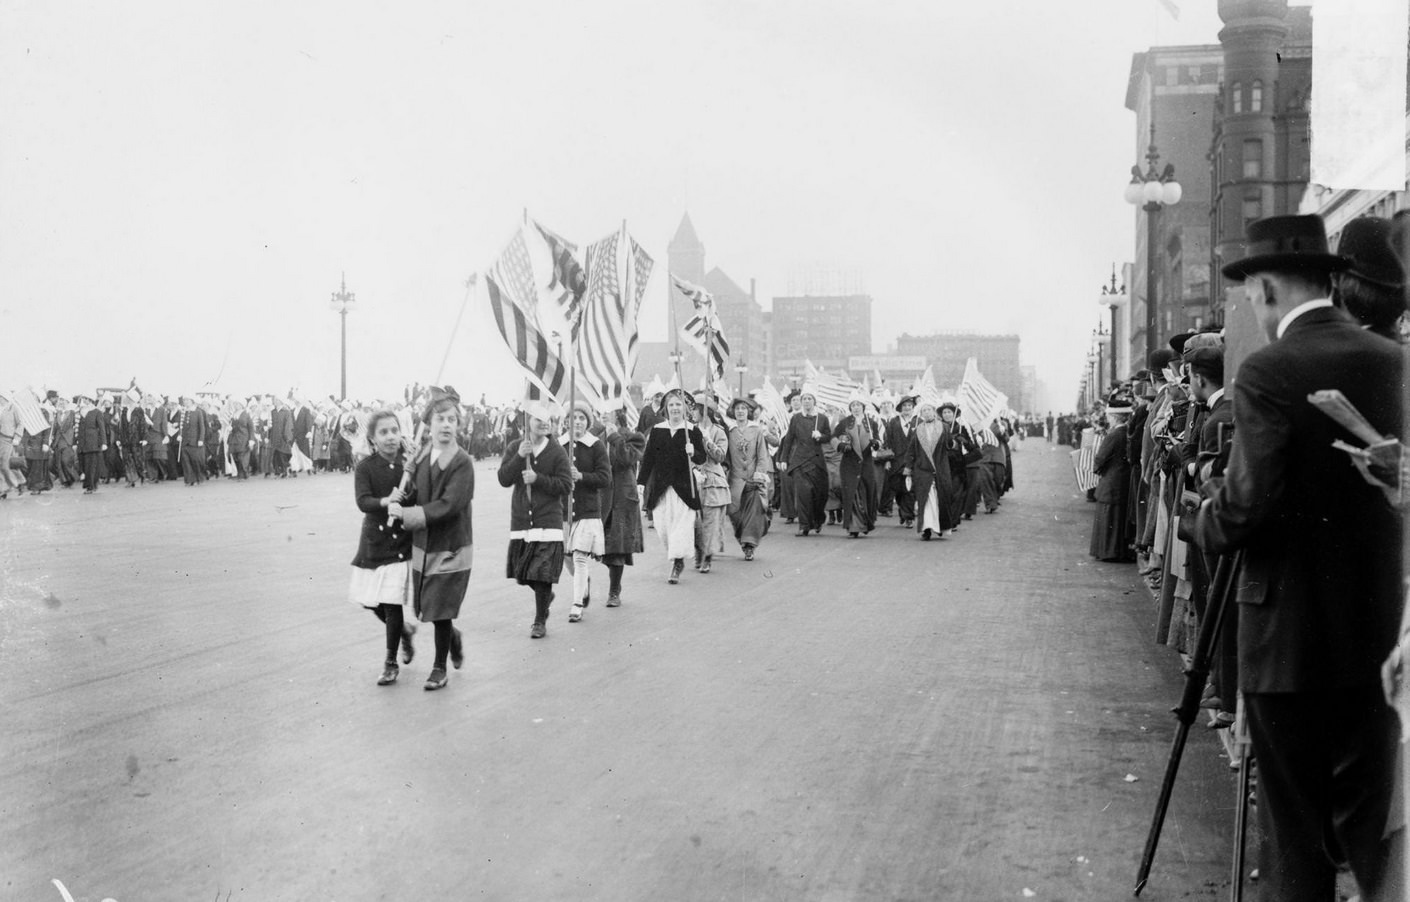 Women'S Suffrage Parade, Girls & Young Women Carrying Flags, 1910s